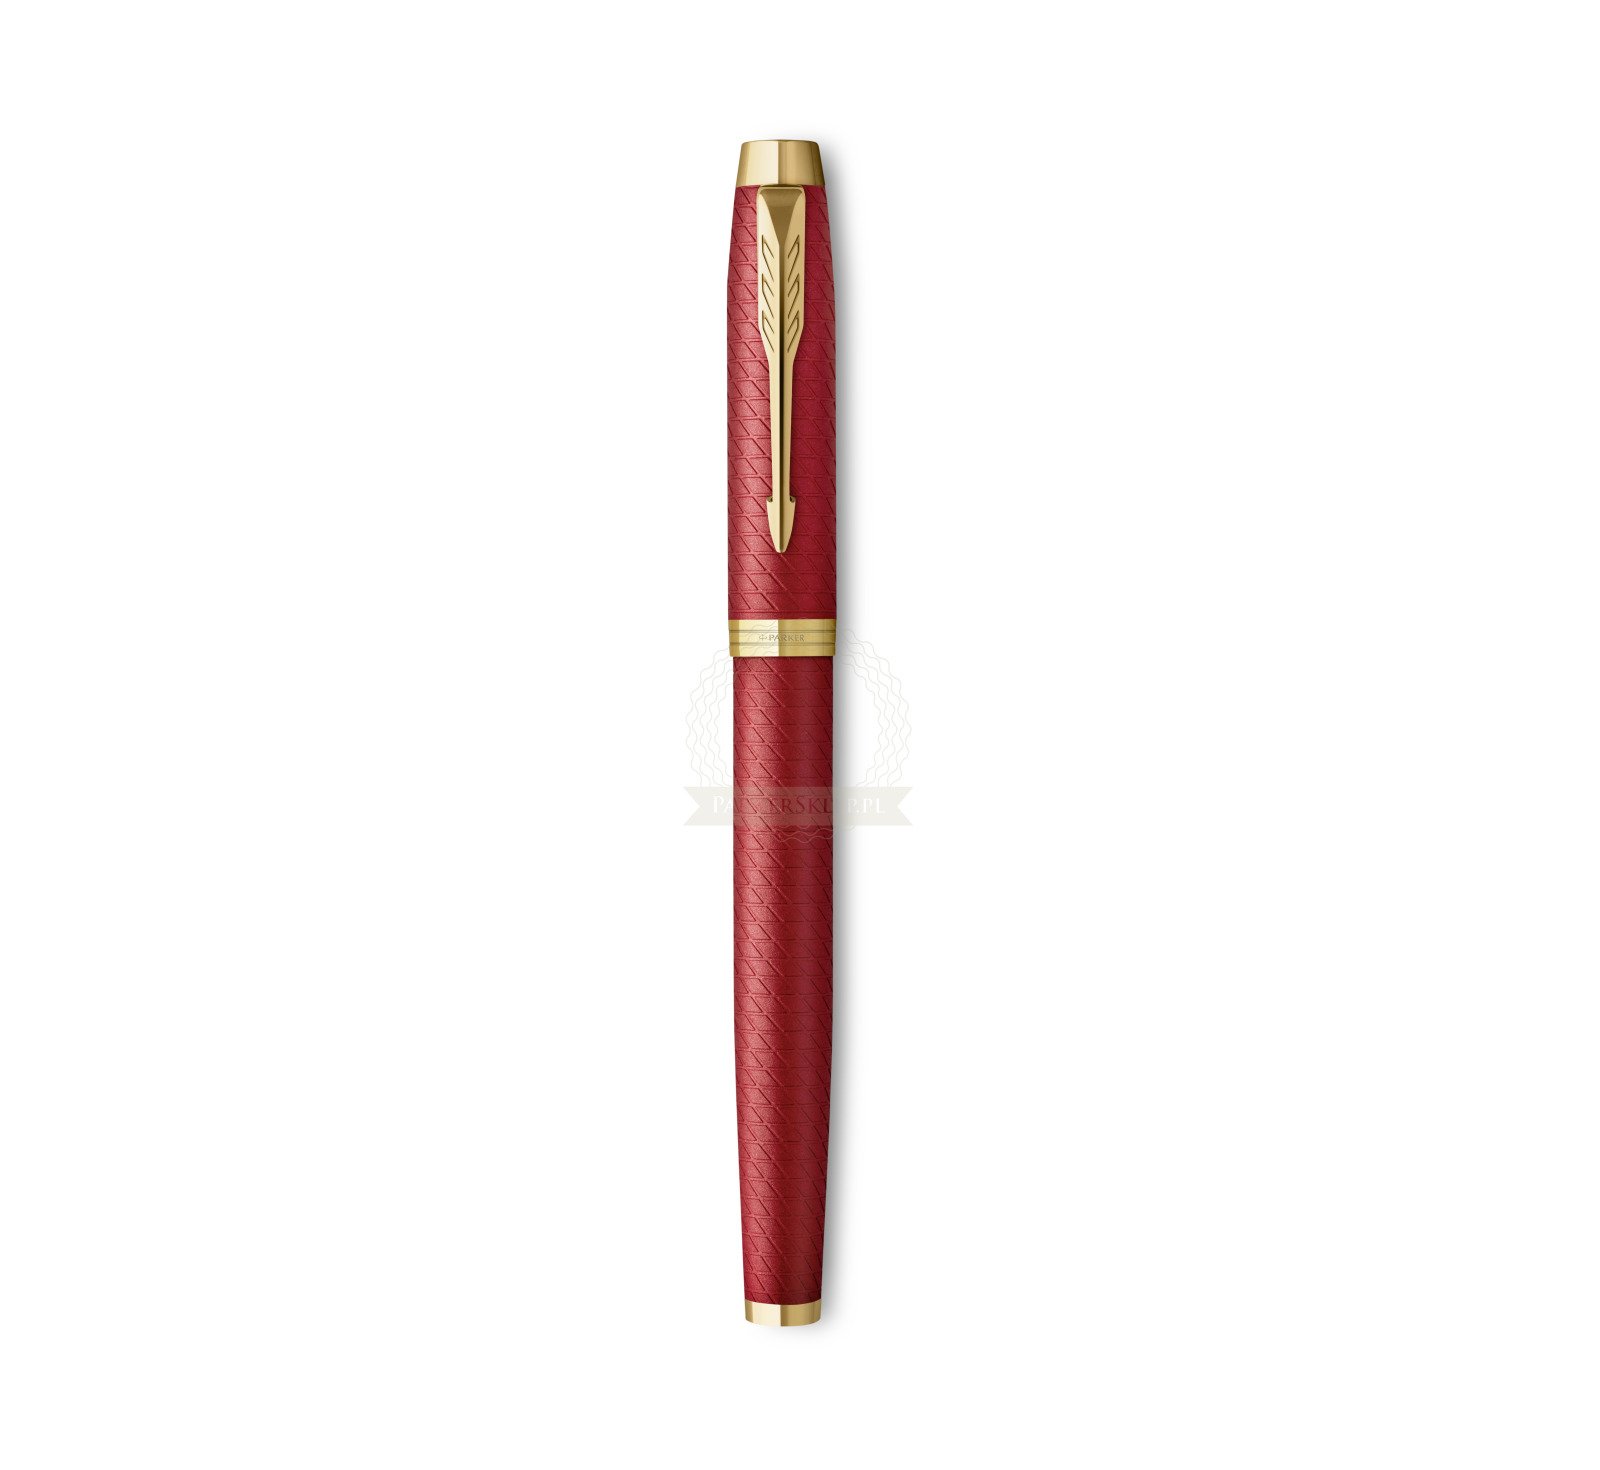 Excellent Classic Nib Pink Parker Pen IM Series Fine Nib Fountain Pen 